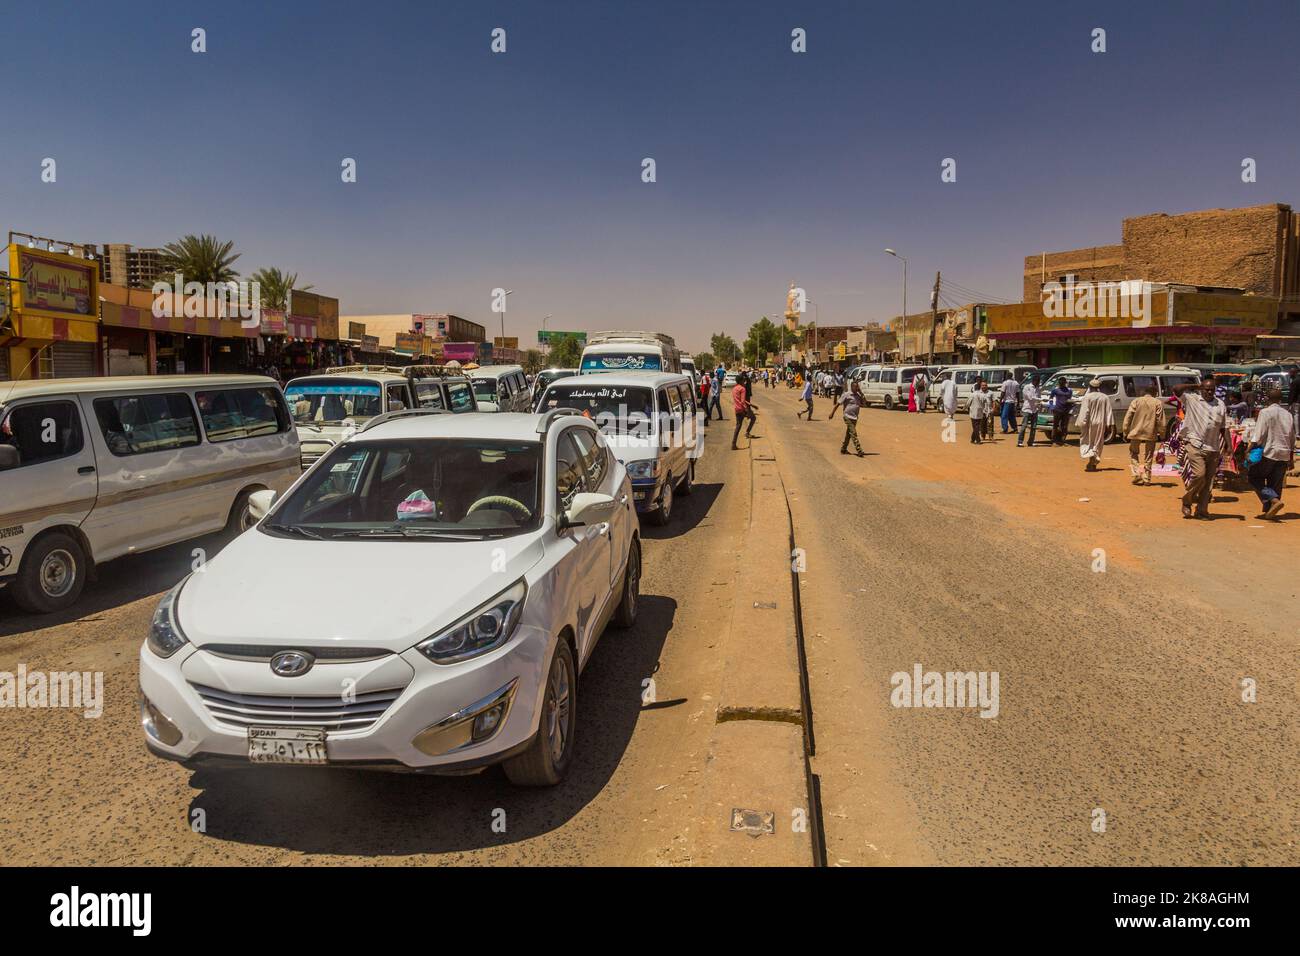 KHARTOUM, SUDAN - MARCH 8, 2019: View of a street in Khartoum, capital of Sudan Stock Photo